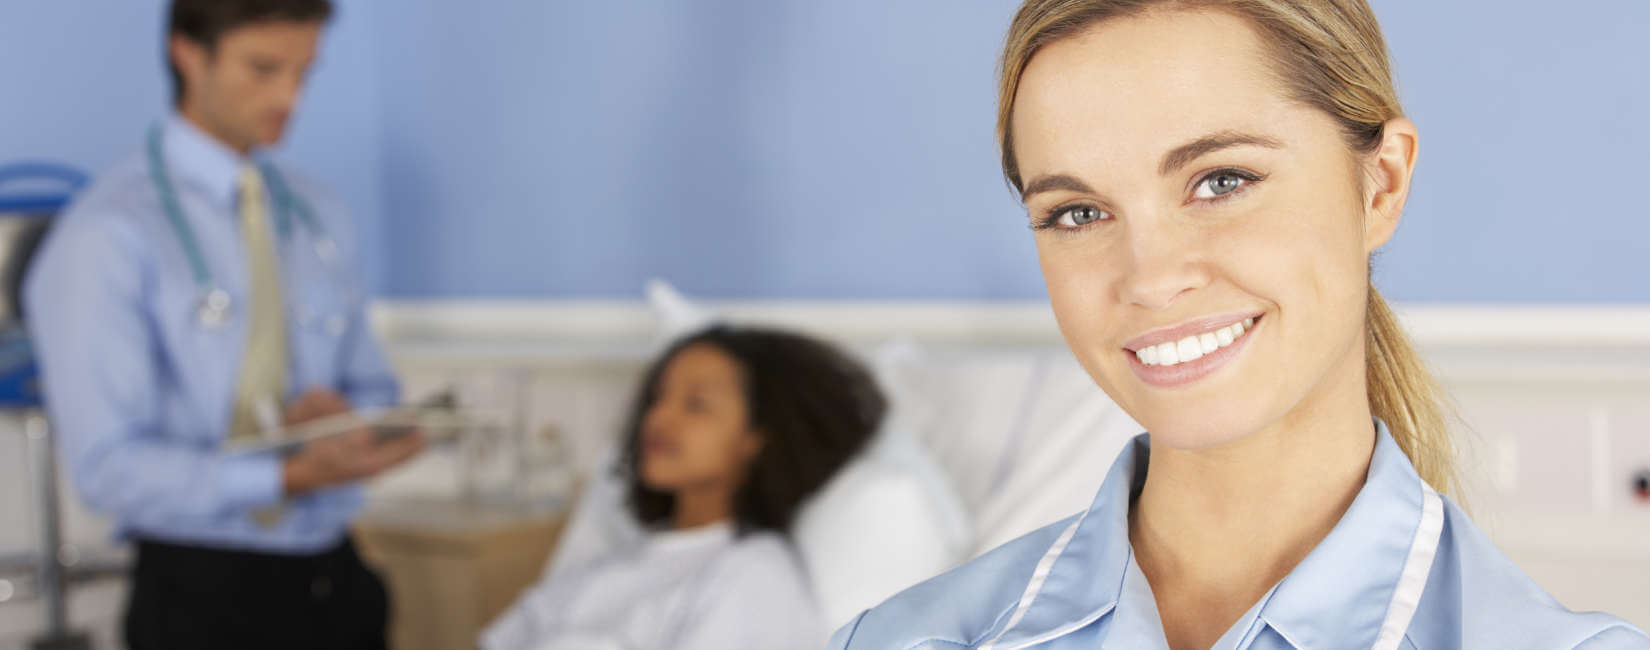 Safeguarding training online for nurses